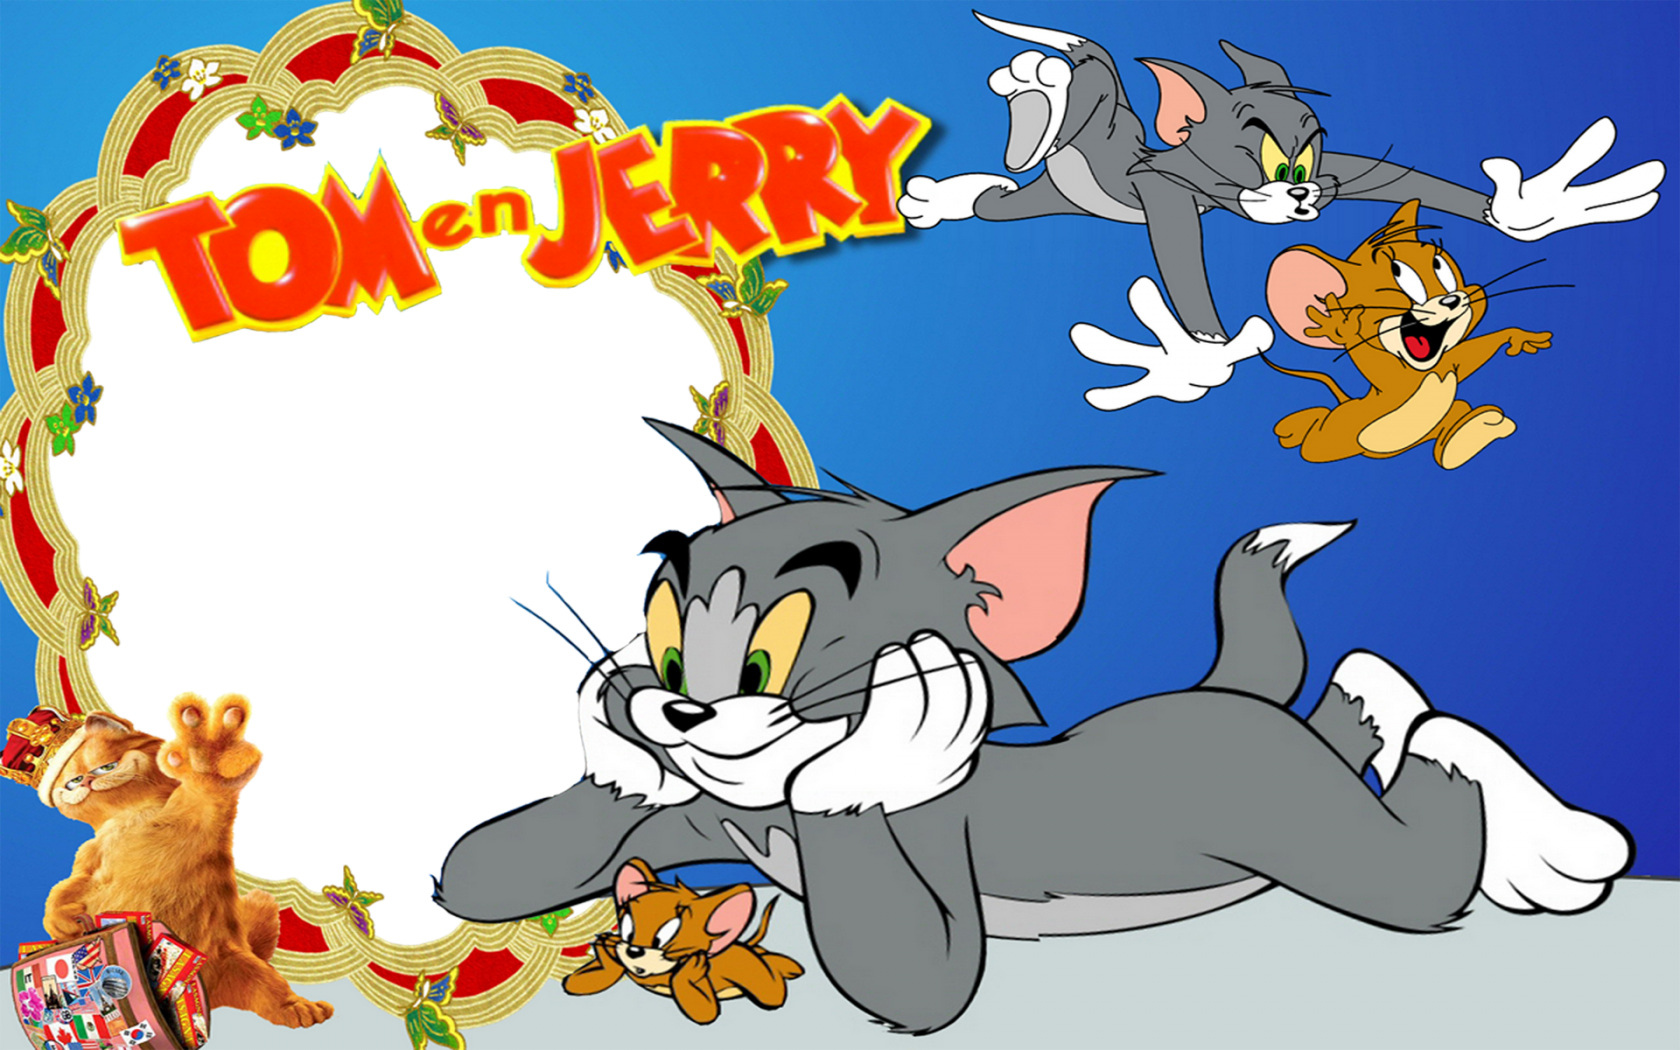 Игр й том. Tom and Jerry. Том ва Джерри. Том и Джерри фон.